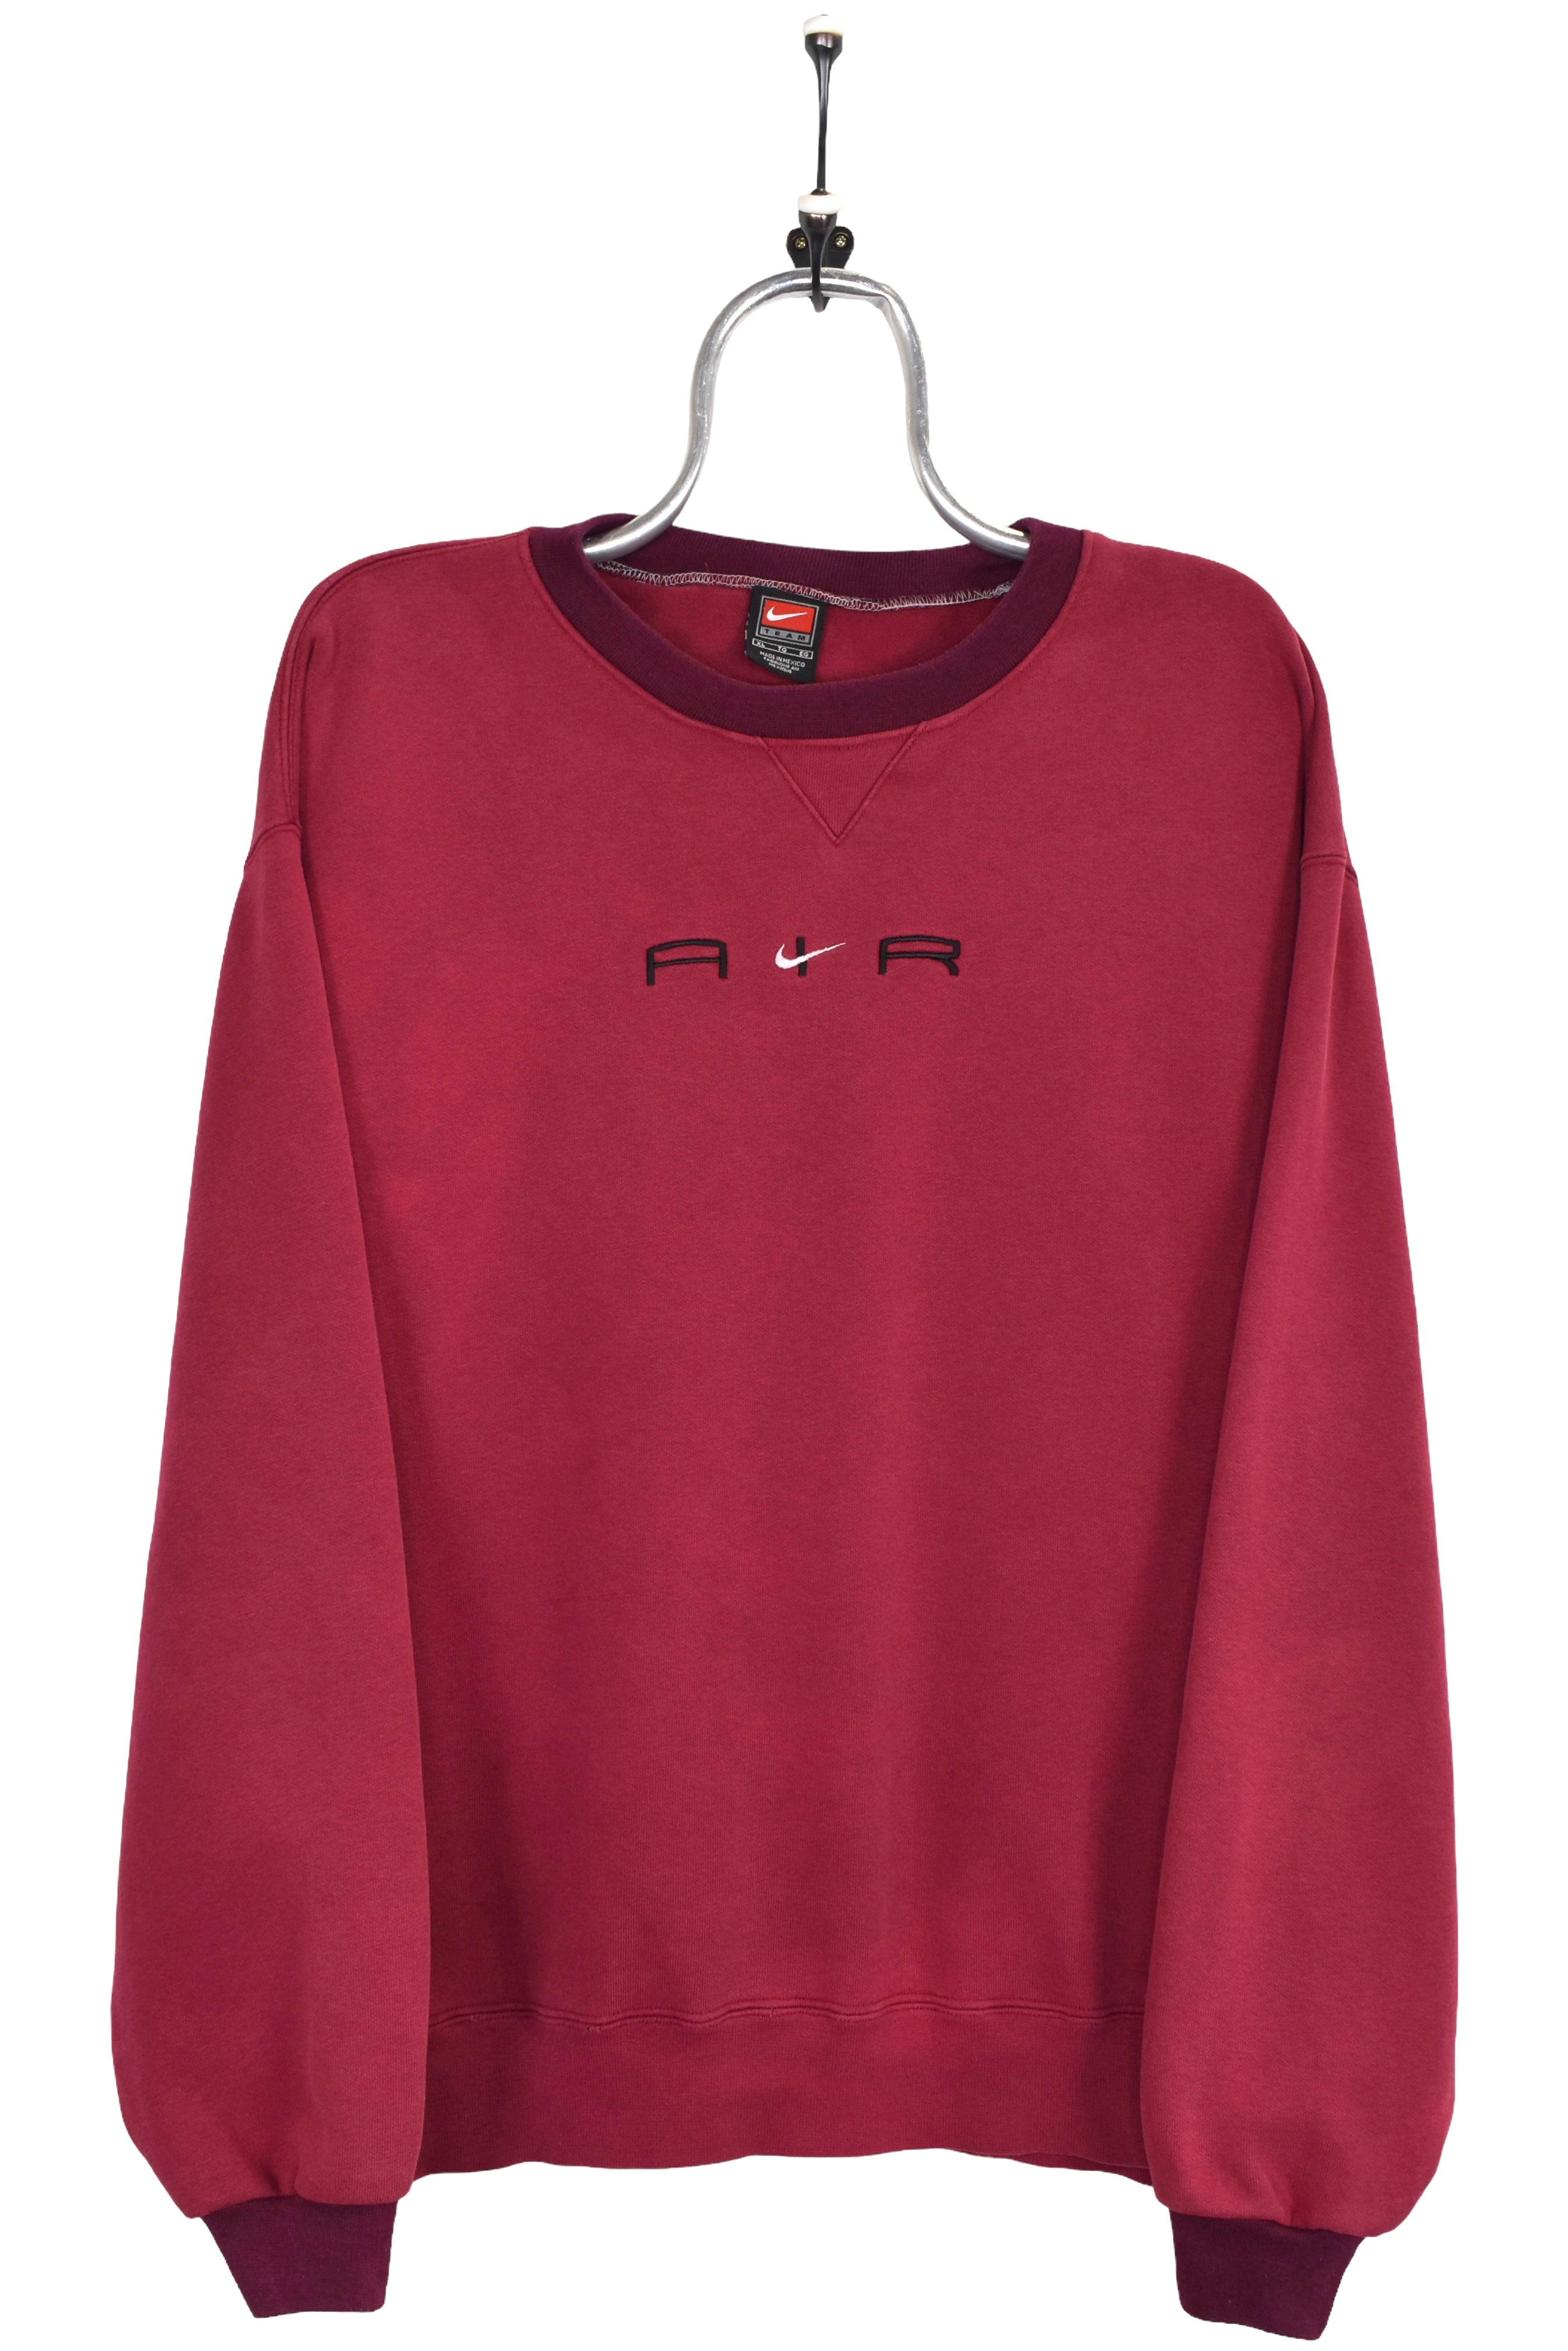 Vintage Nike Air sweatshirt, burgundy embroidered crewneck - XL